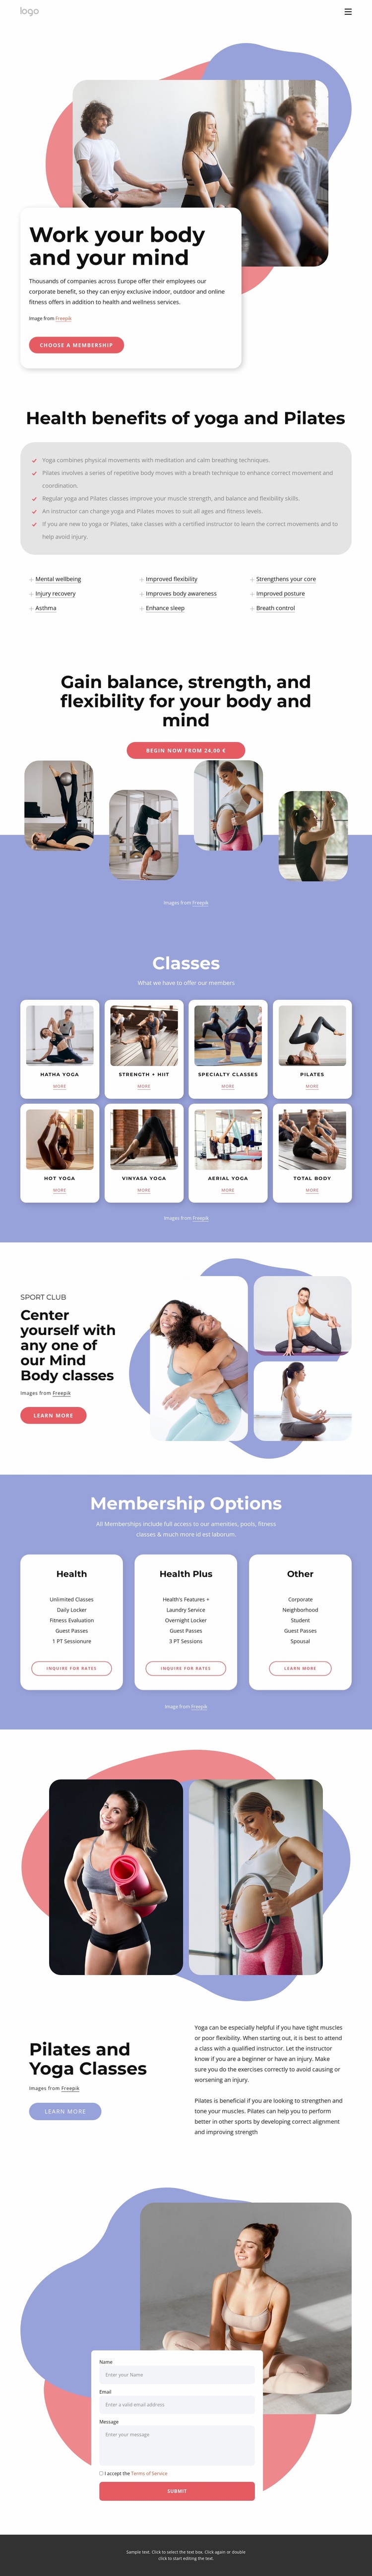 Pilates and yoga classes Website Design